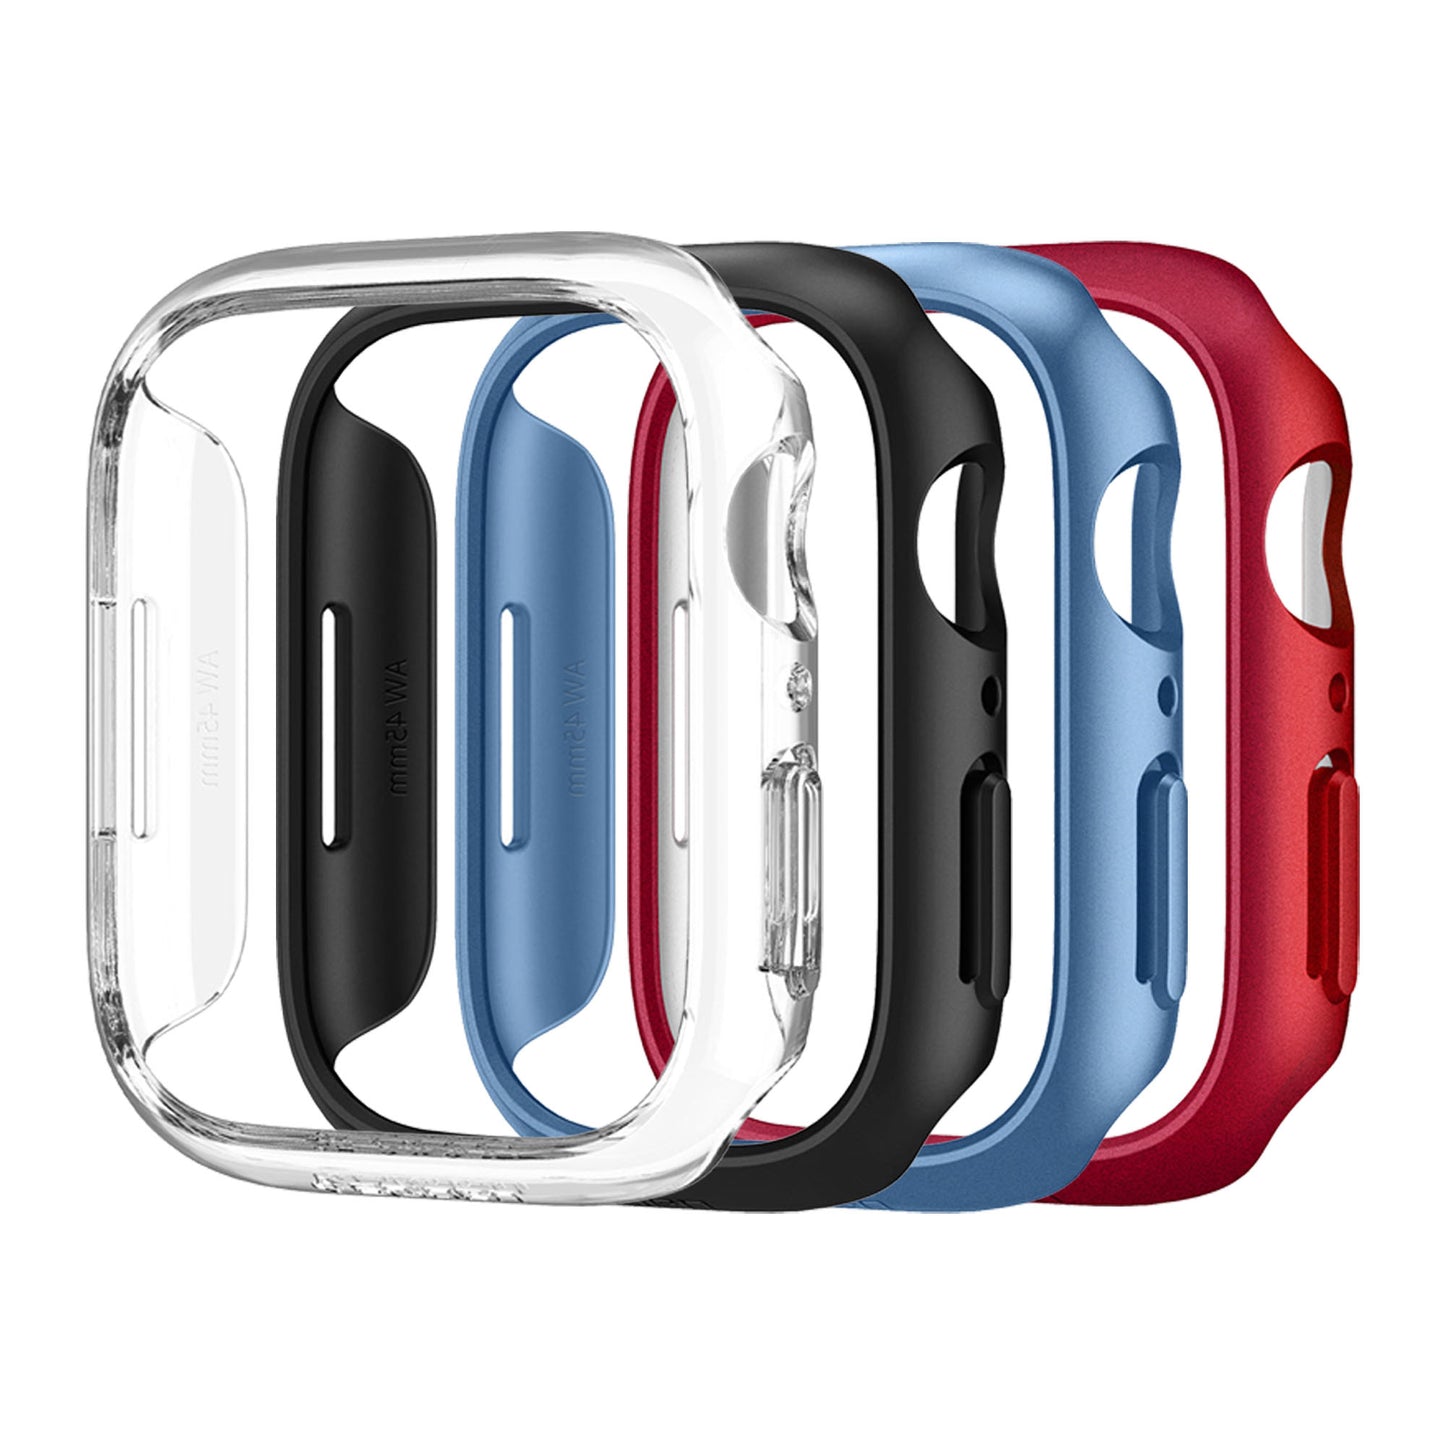 Spigen Thin Fit Case for Apple Watch Series 7 ( 45mm ) - Mettalic Blue (Barcode: 8809811857610 )